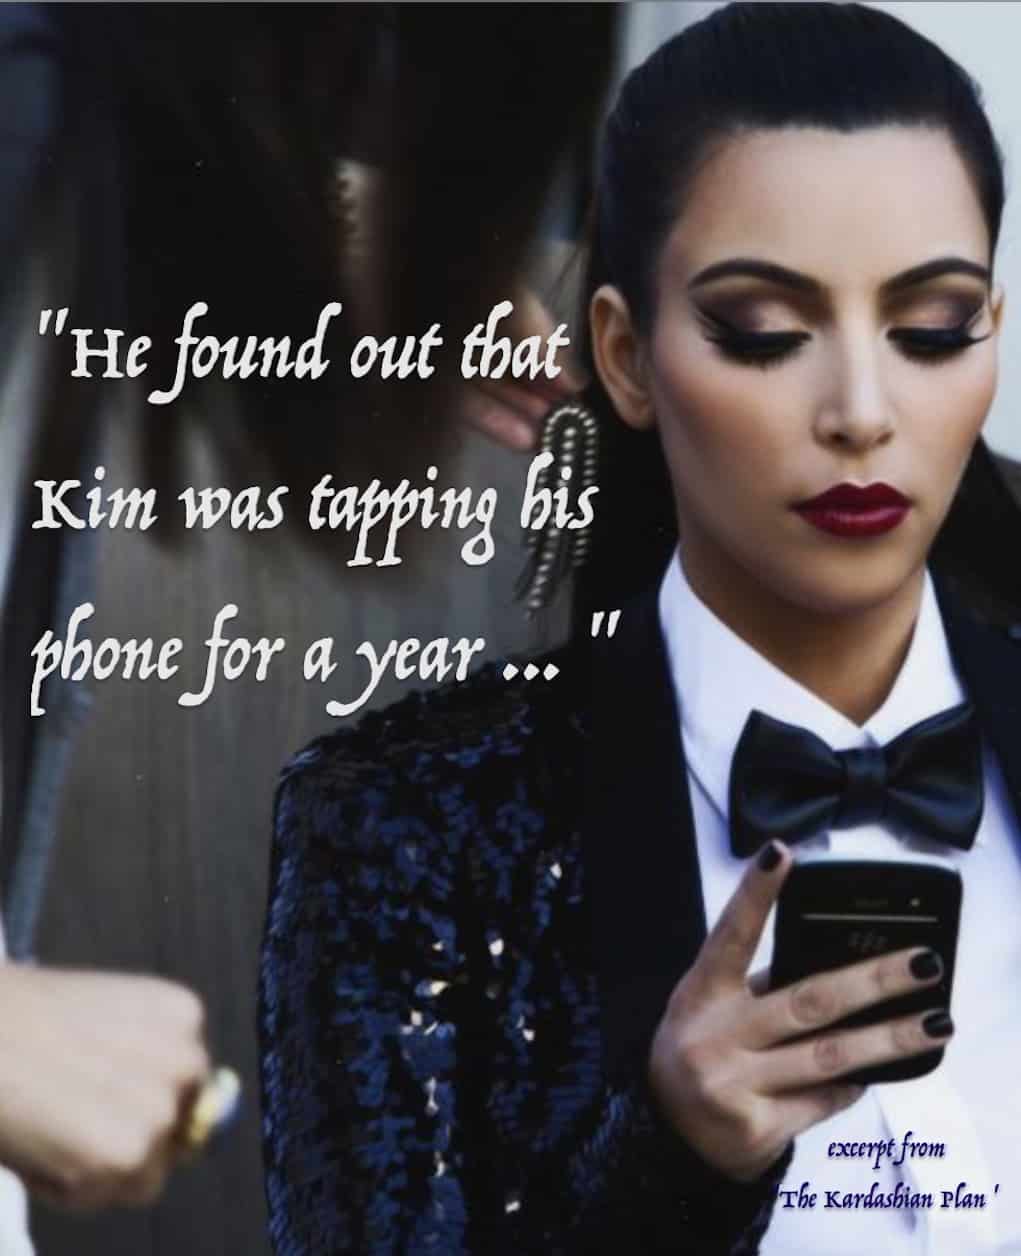 kardashian book kim wiretapping